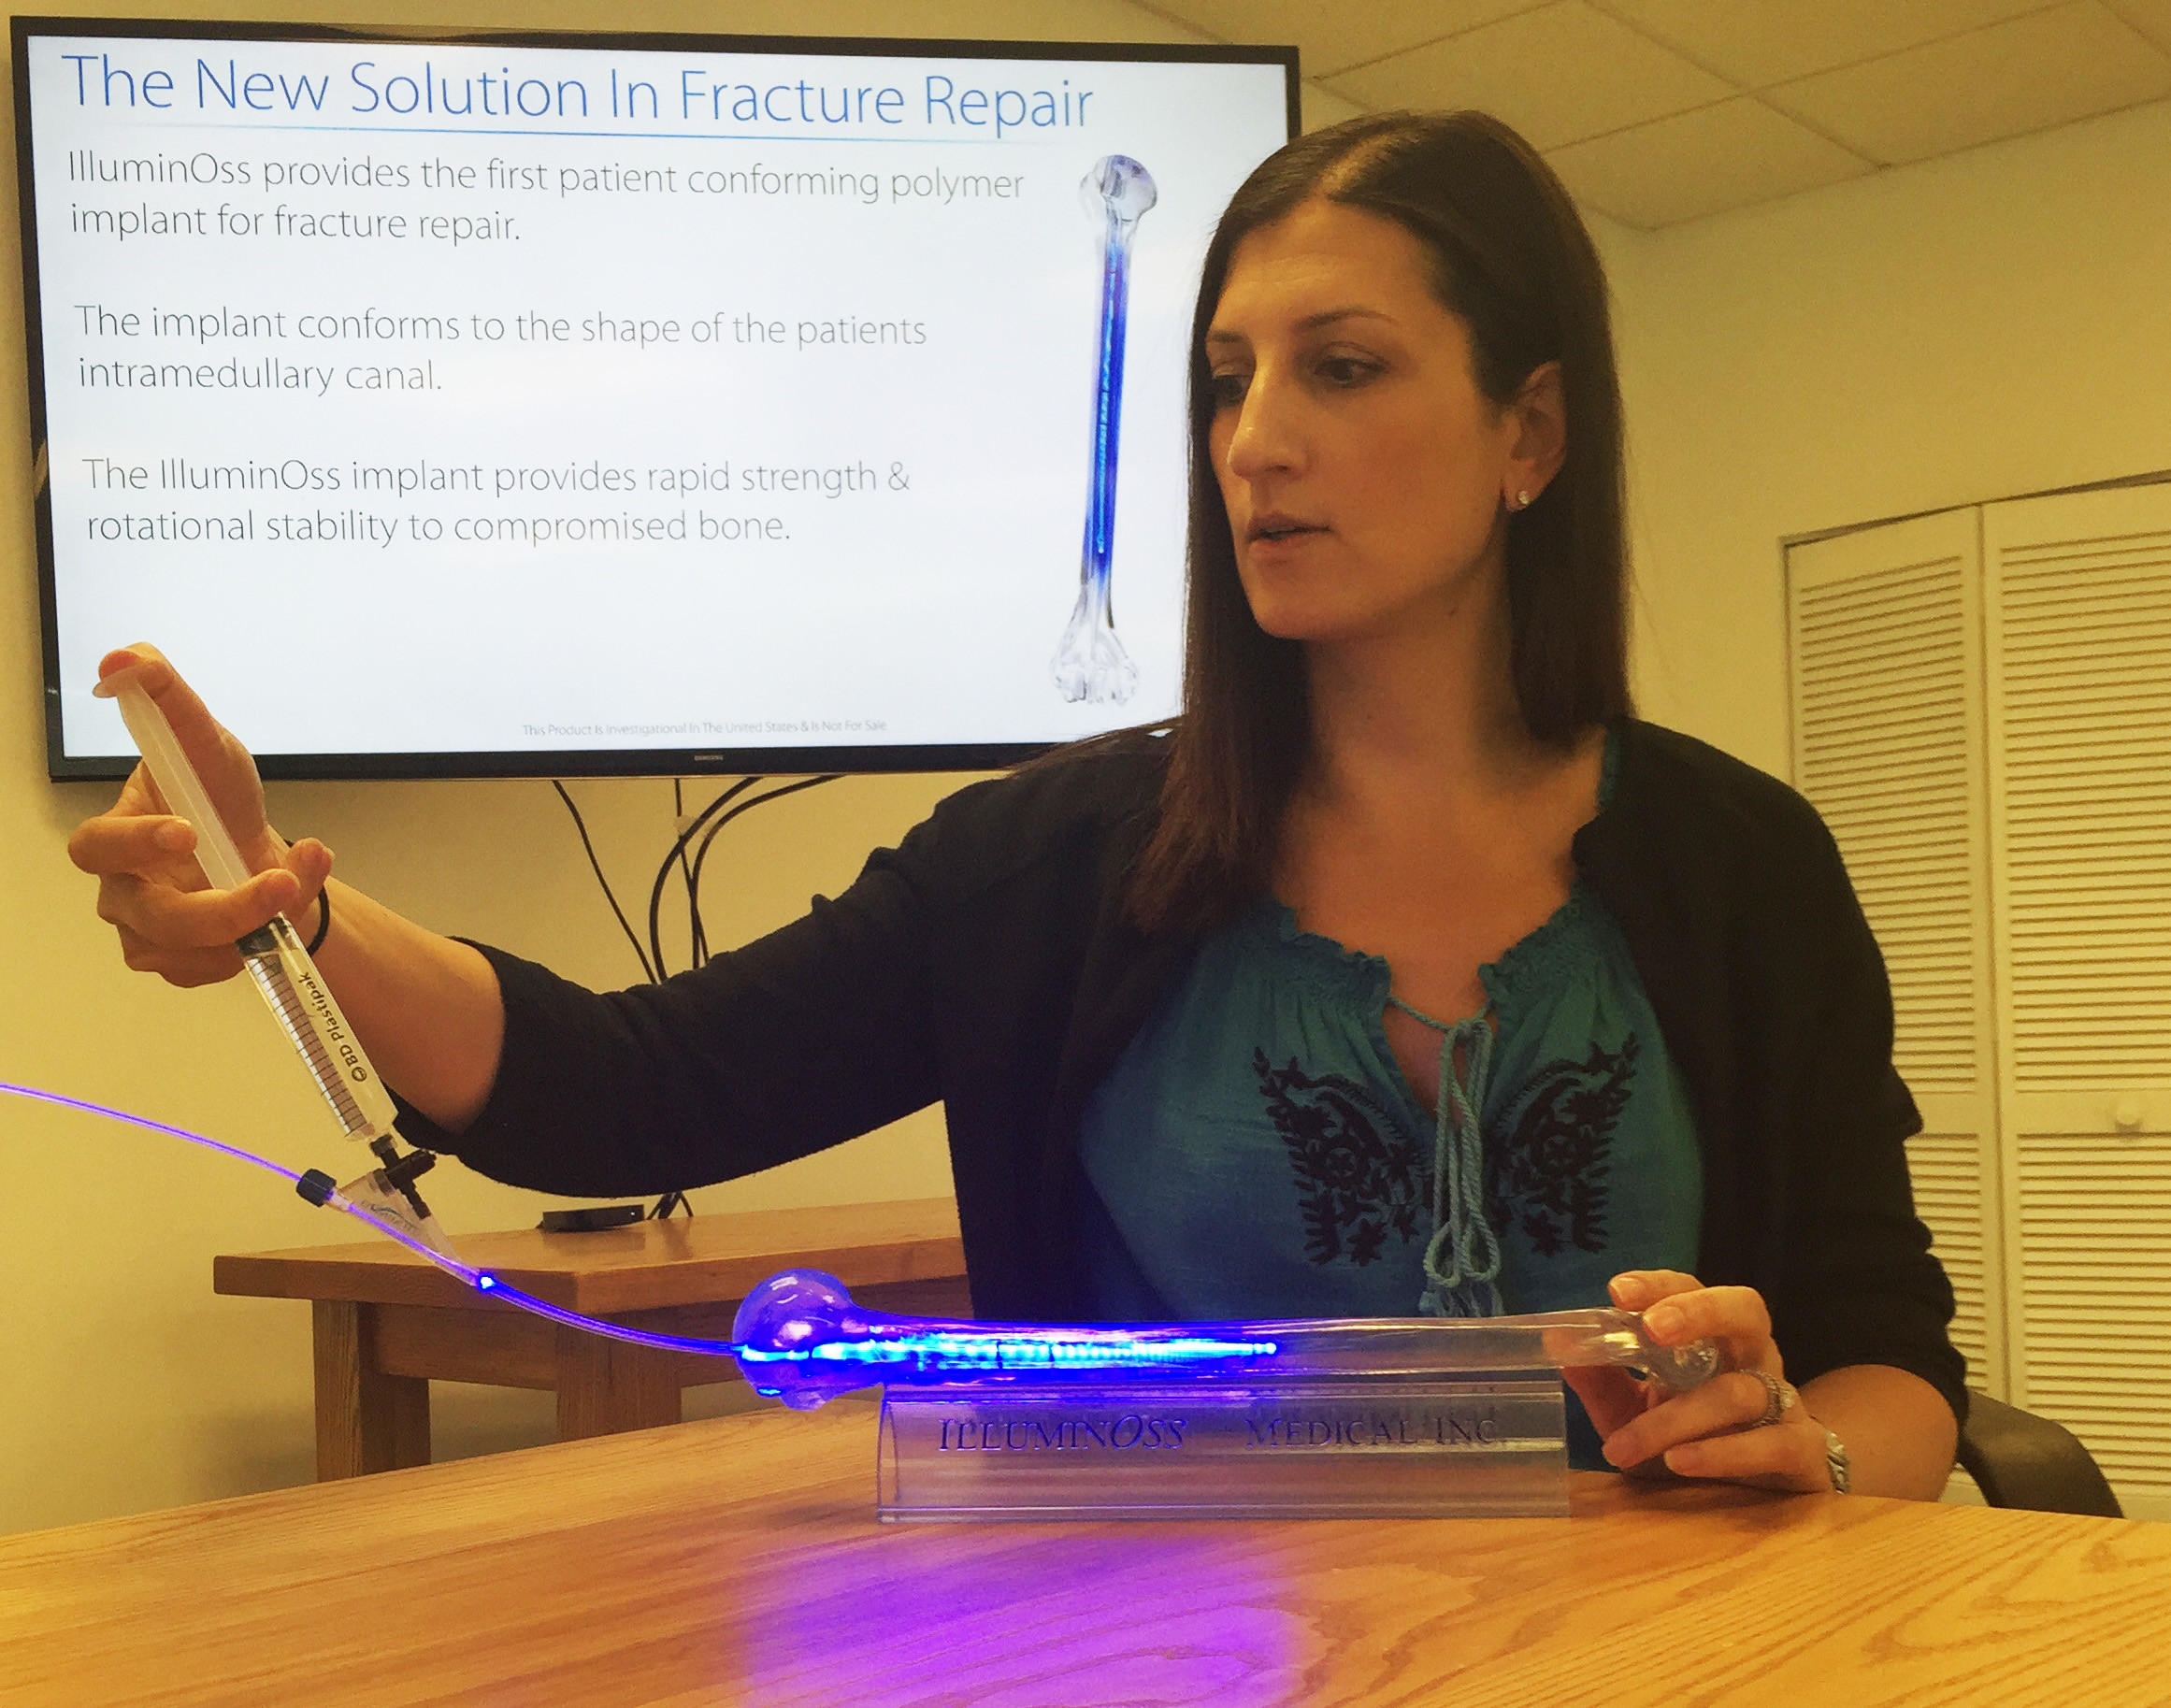 An employee demonstrates IlluminOss's new technology to repair bone fracture.